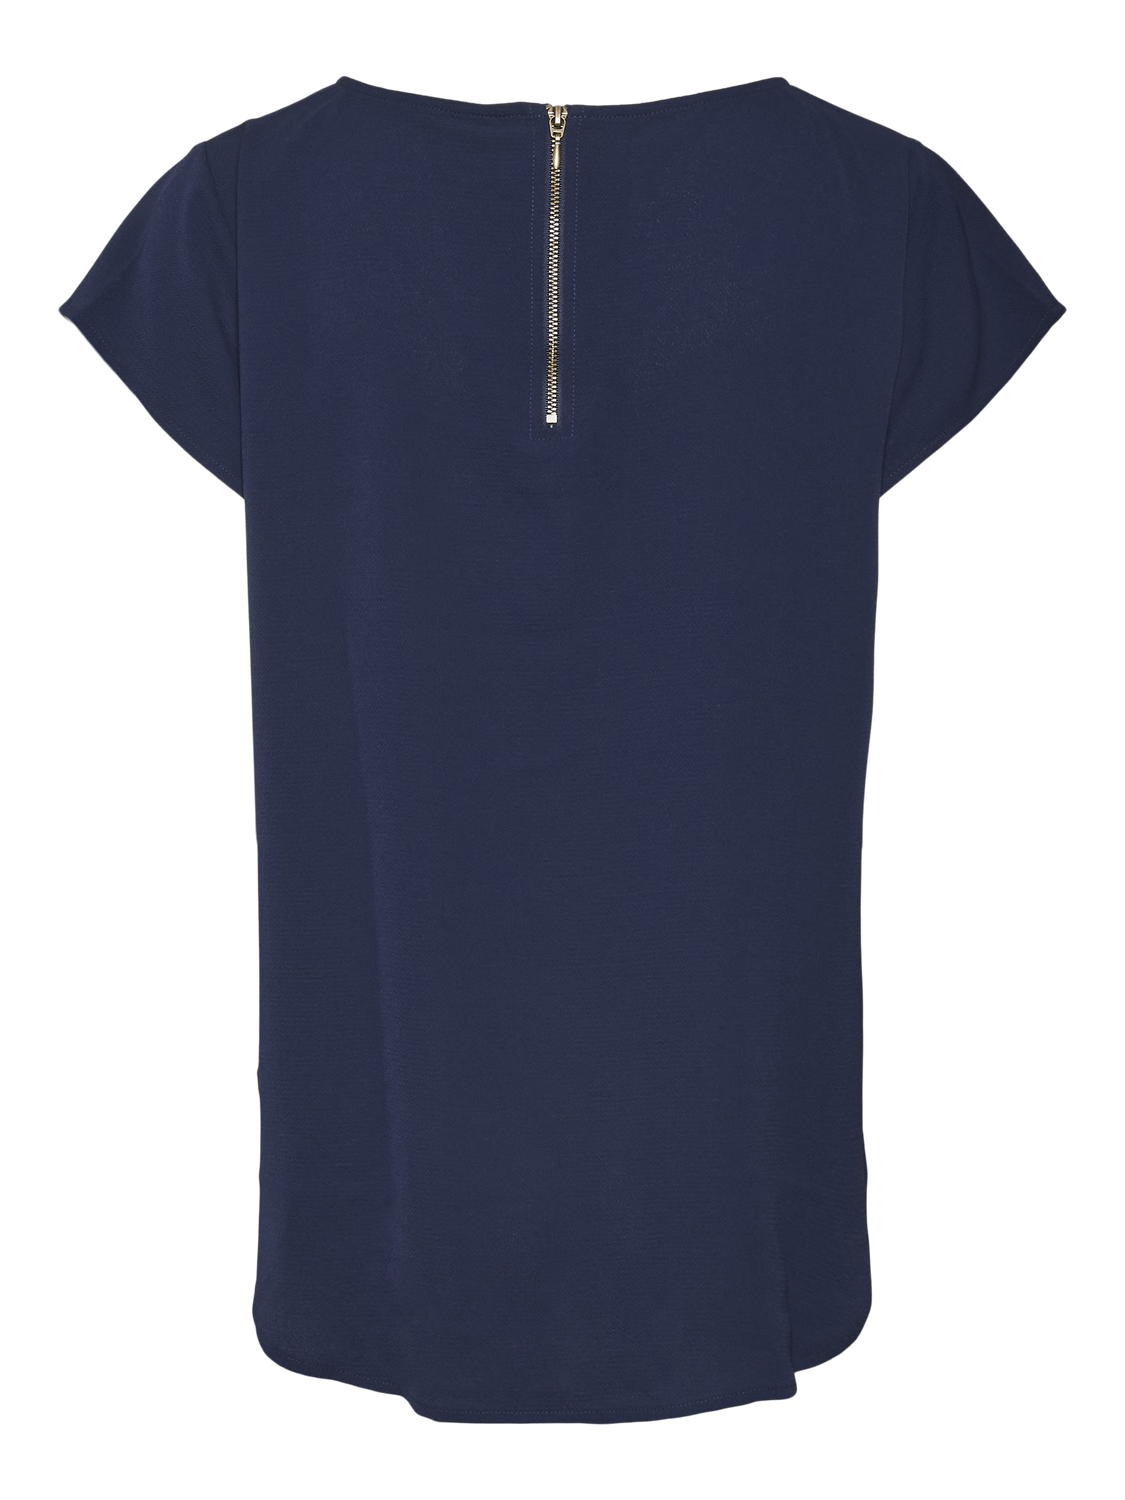 VMSAKI T-Shirts & Tops - Navy Blazer